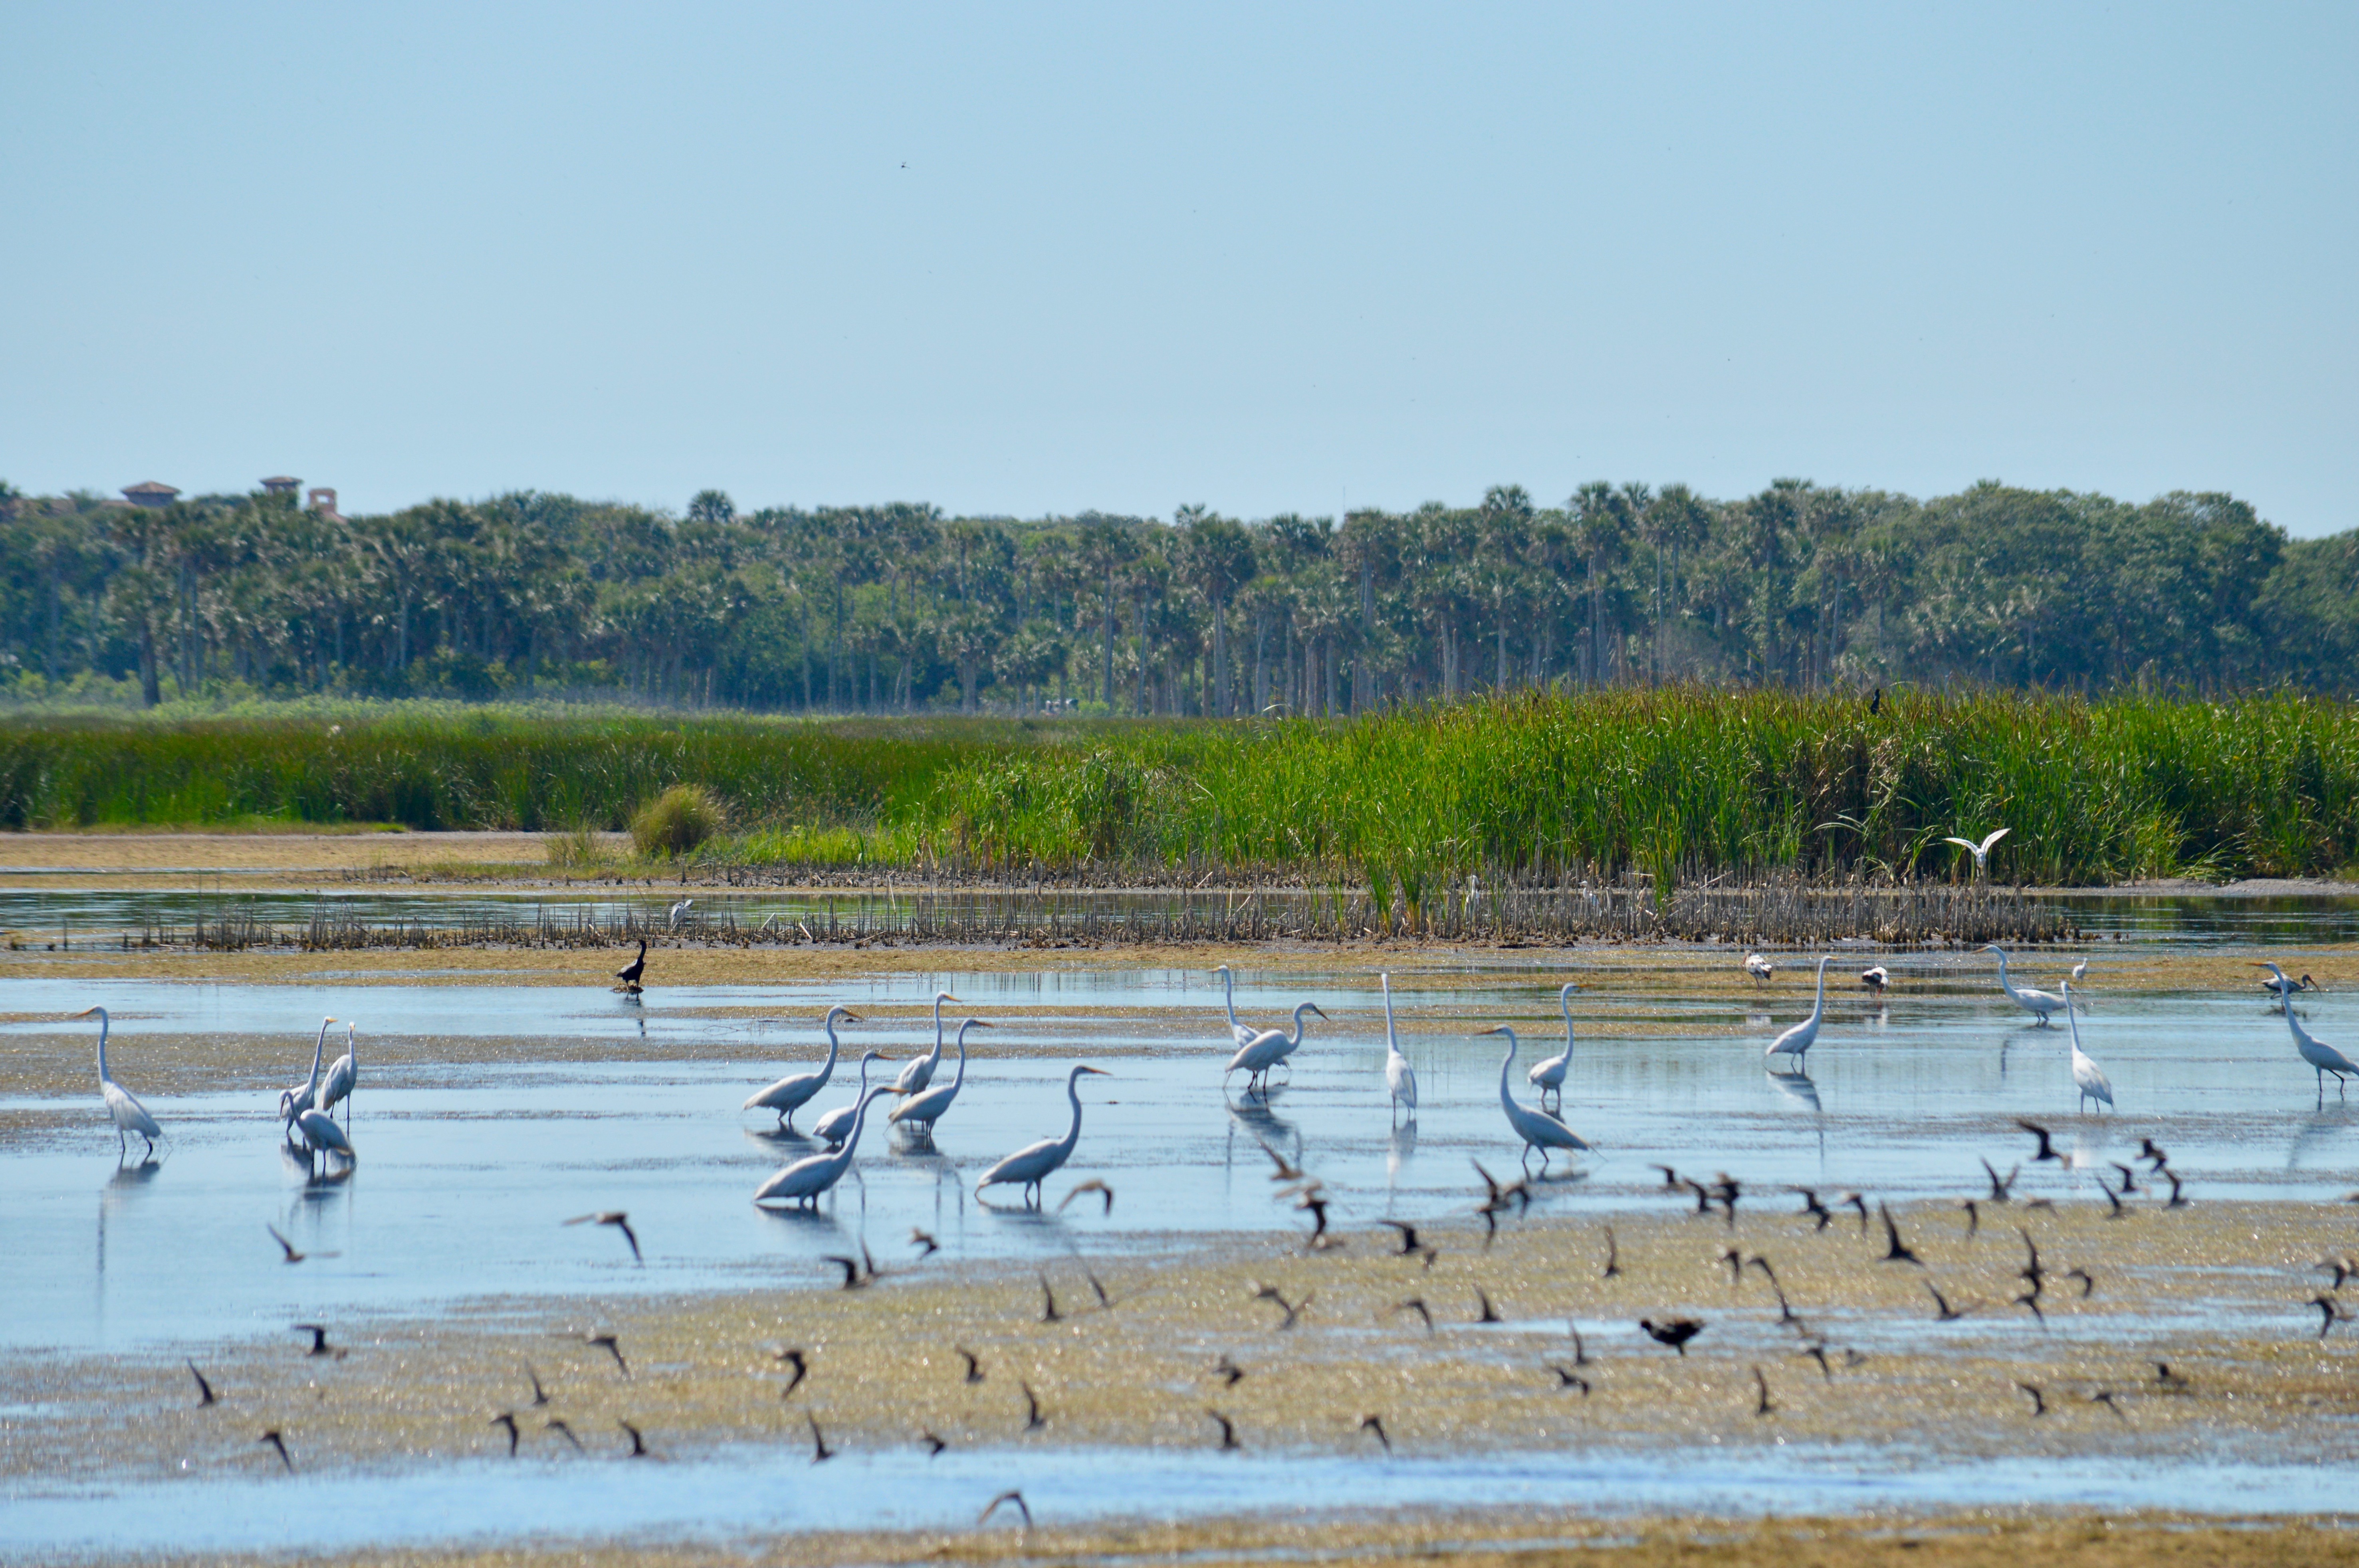 a wetland scene with birds